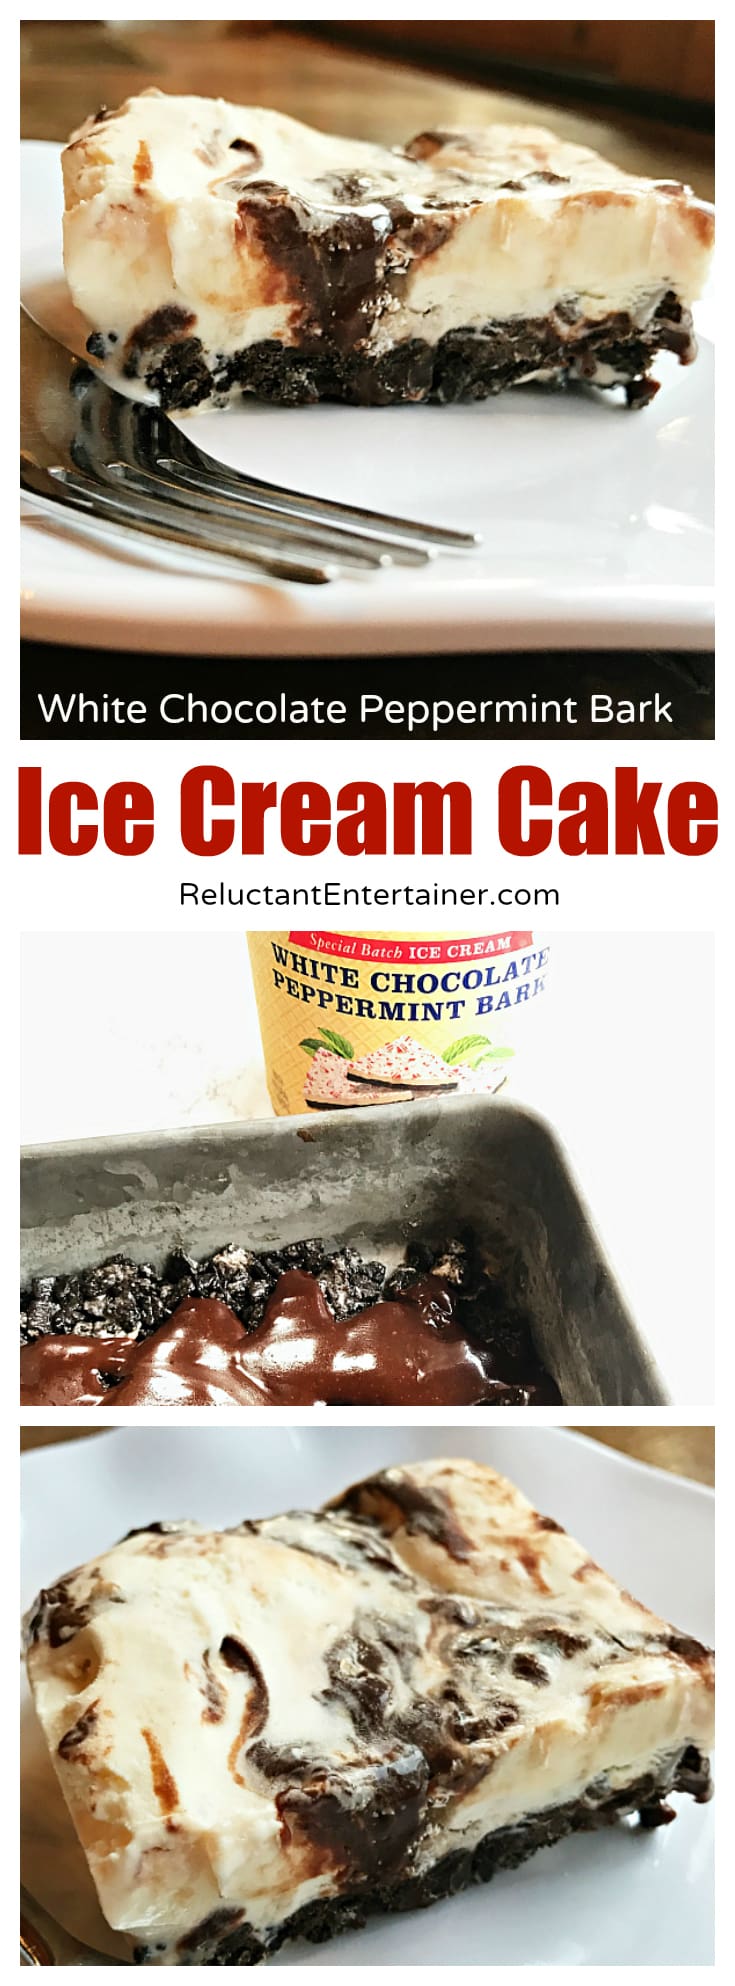 White Chocolate Peppermint Bark Ice Cream Cake